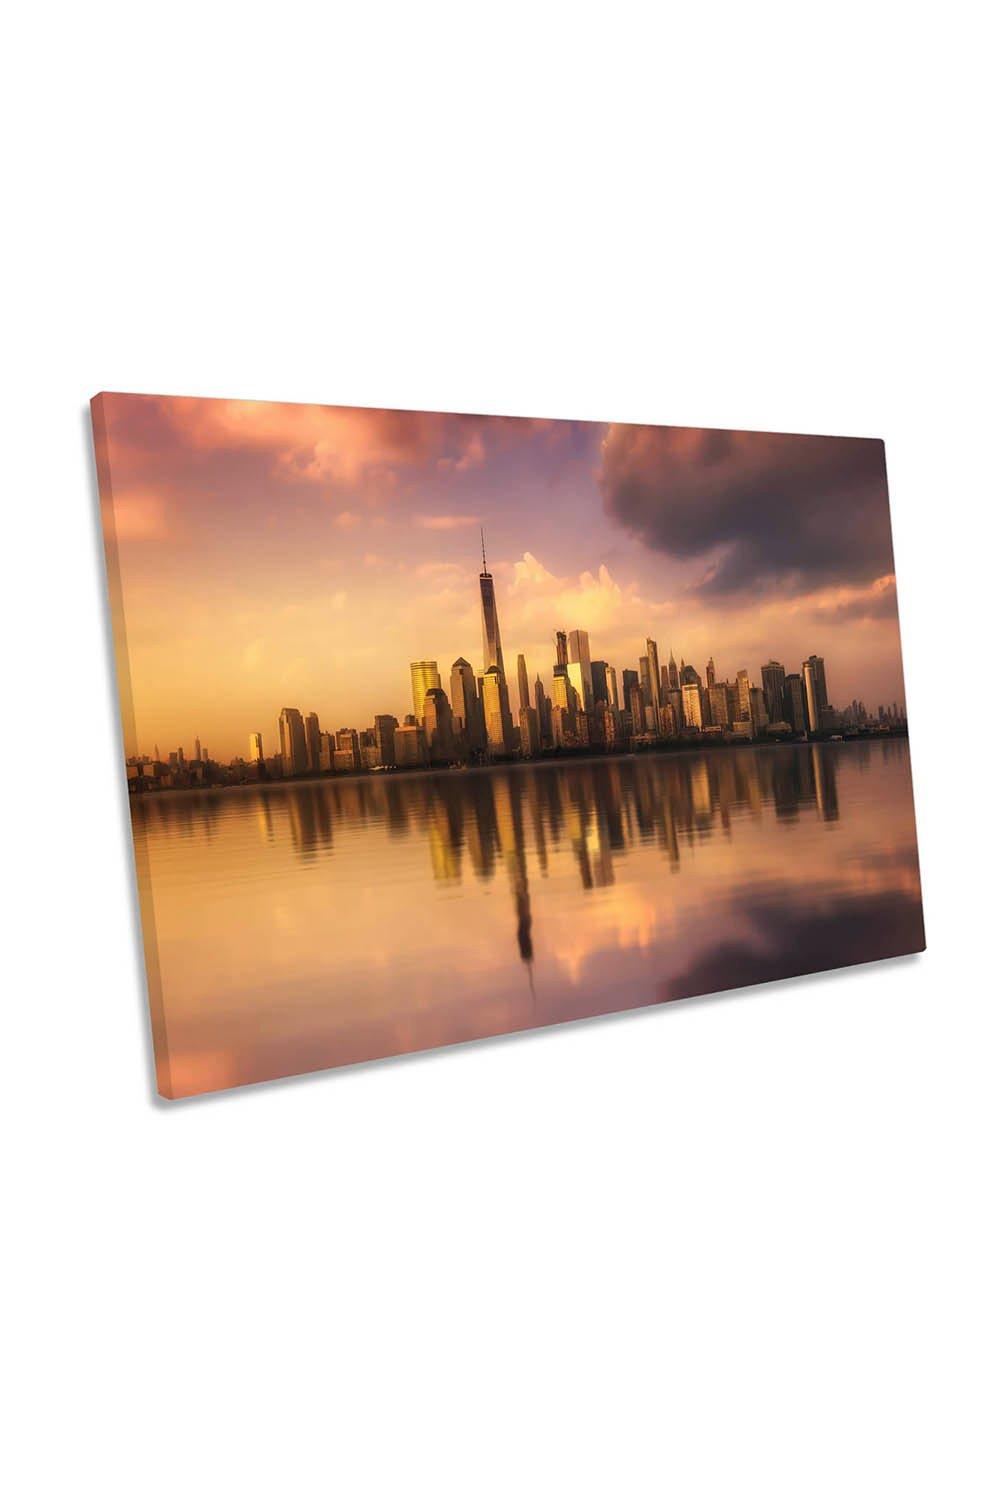 New York City Skyline Orange Canvas Wall Art Picture Print